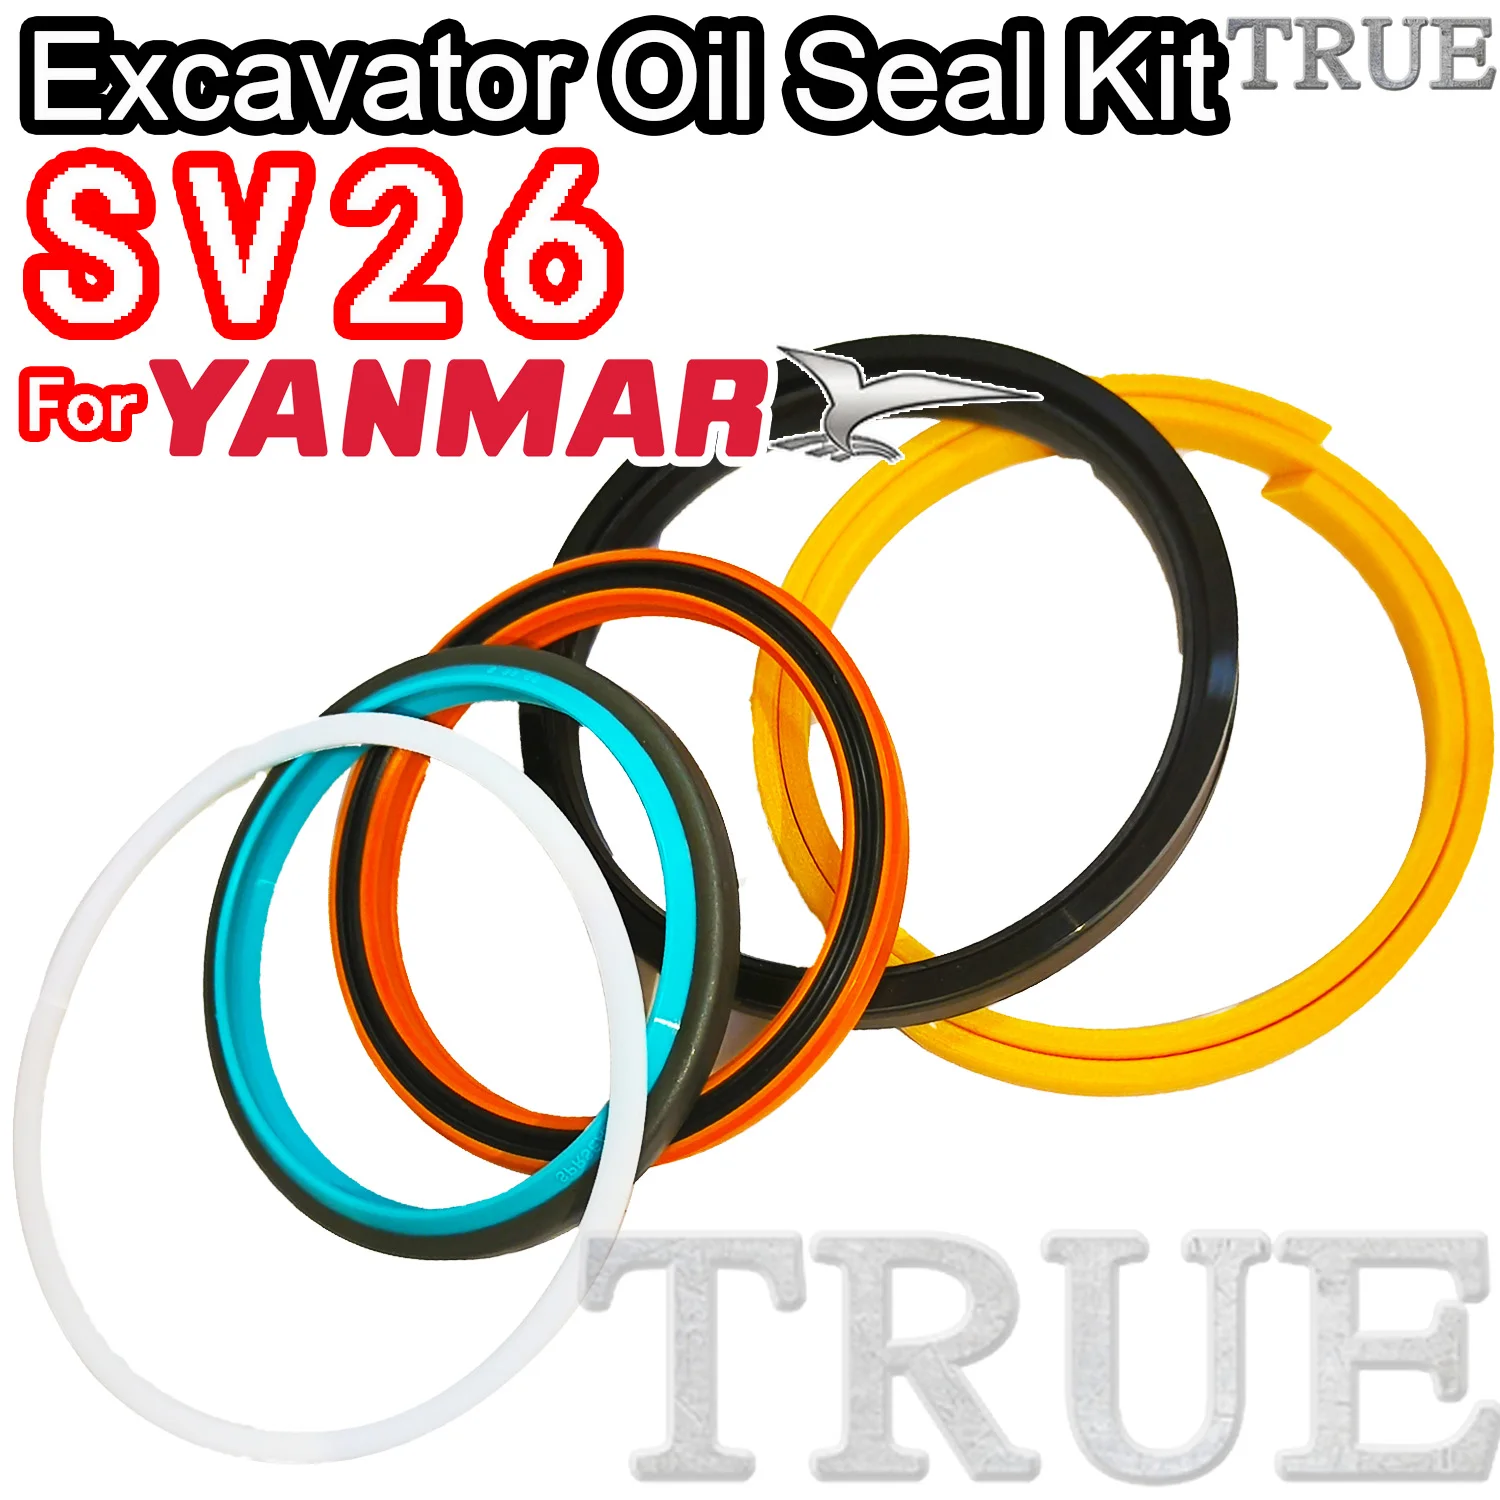 

For SV26 Yanmar Oil Seal Excavator Repair Kit Gasket Nitrile NBR Nok Washer Skf Service Orginal Quality Track Spovel Hammer Tool